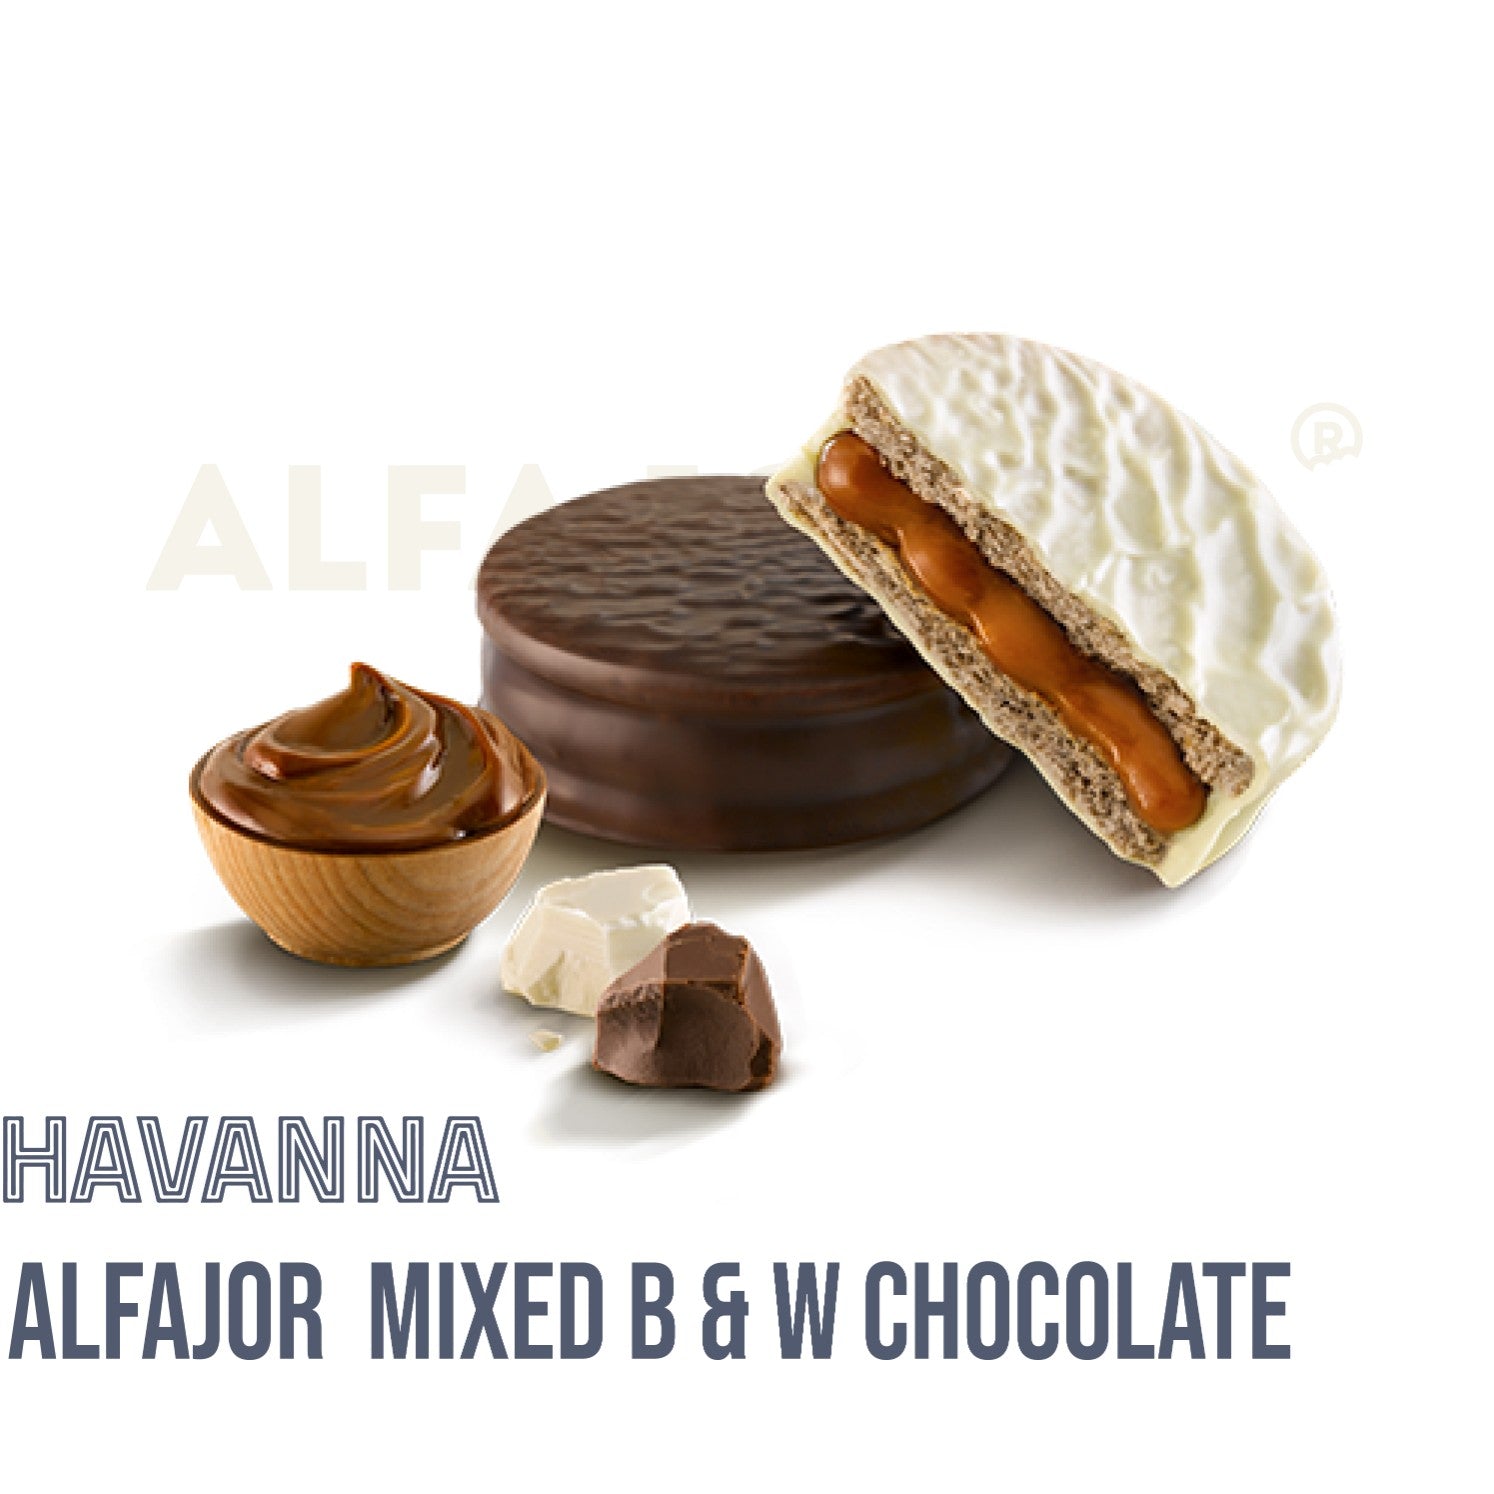 Alfajor Mixed and White Chocolate | Havanna – Store